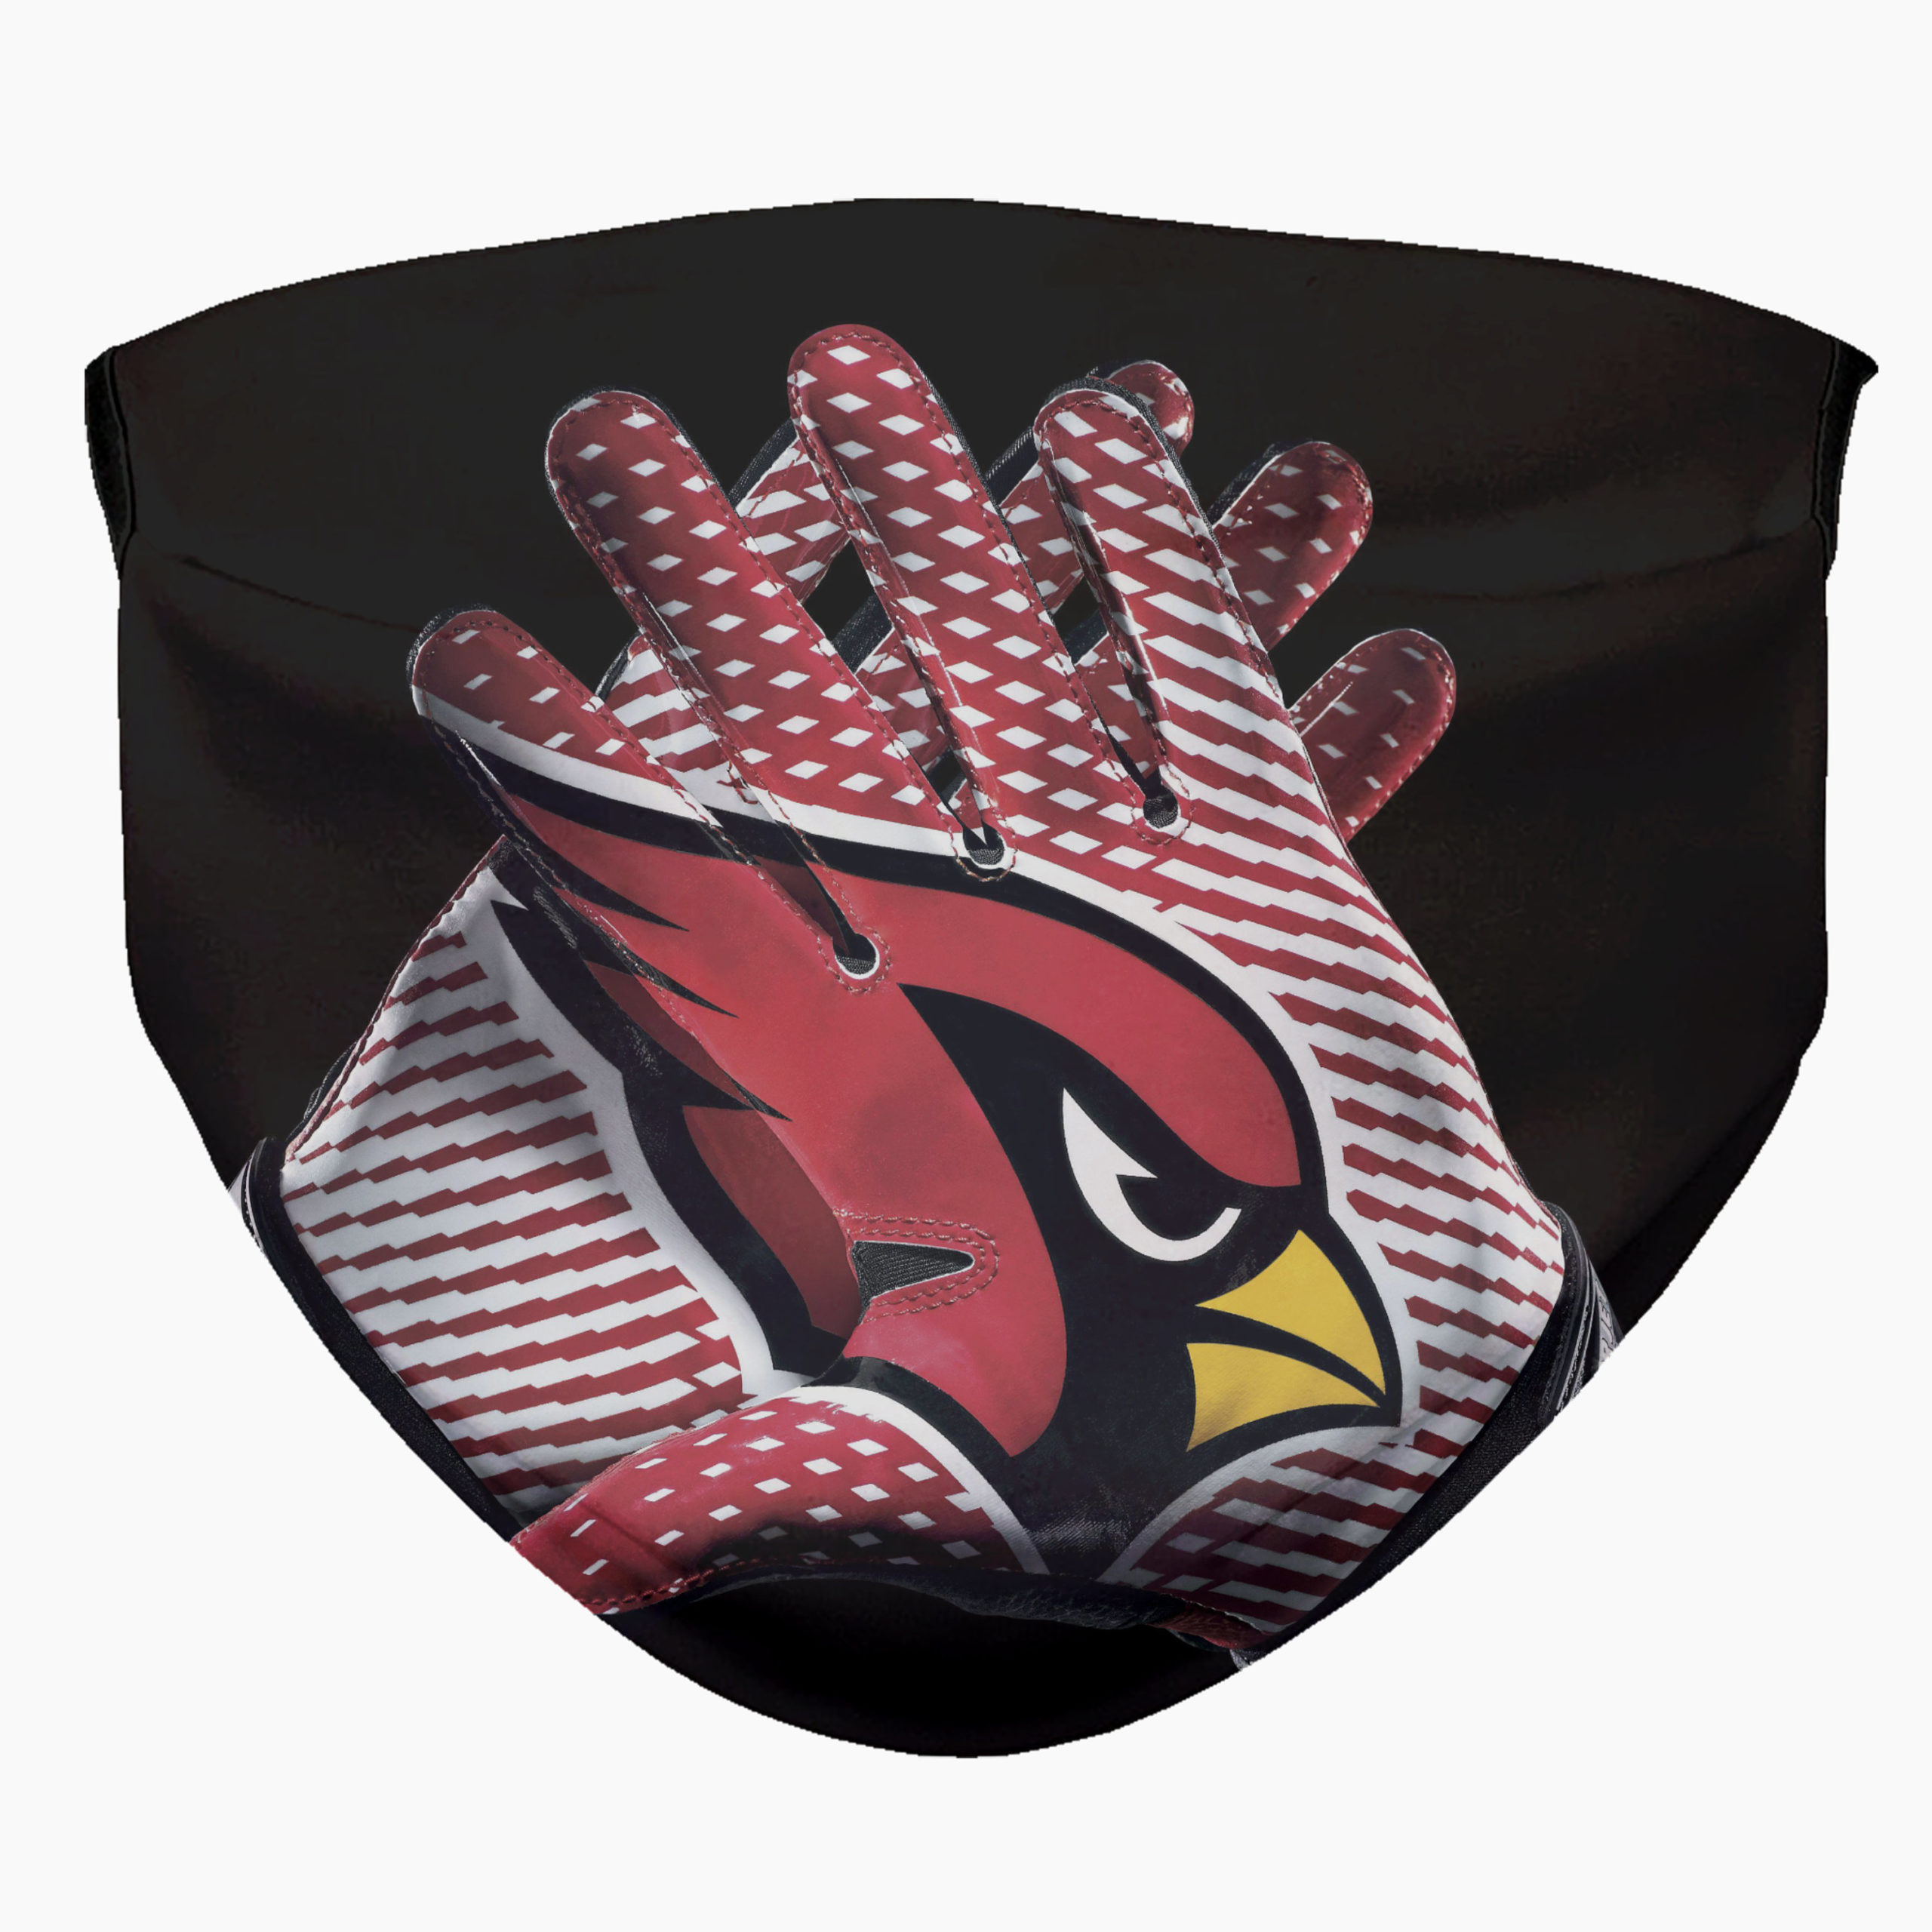 nfl cardinals gloves